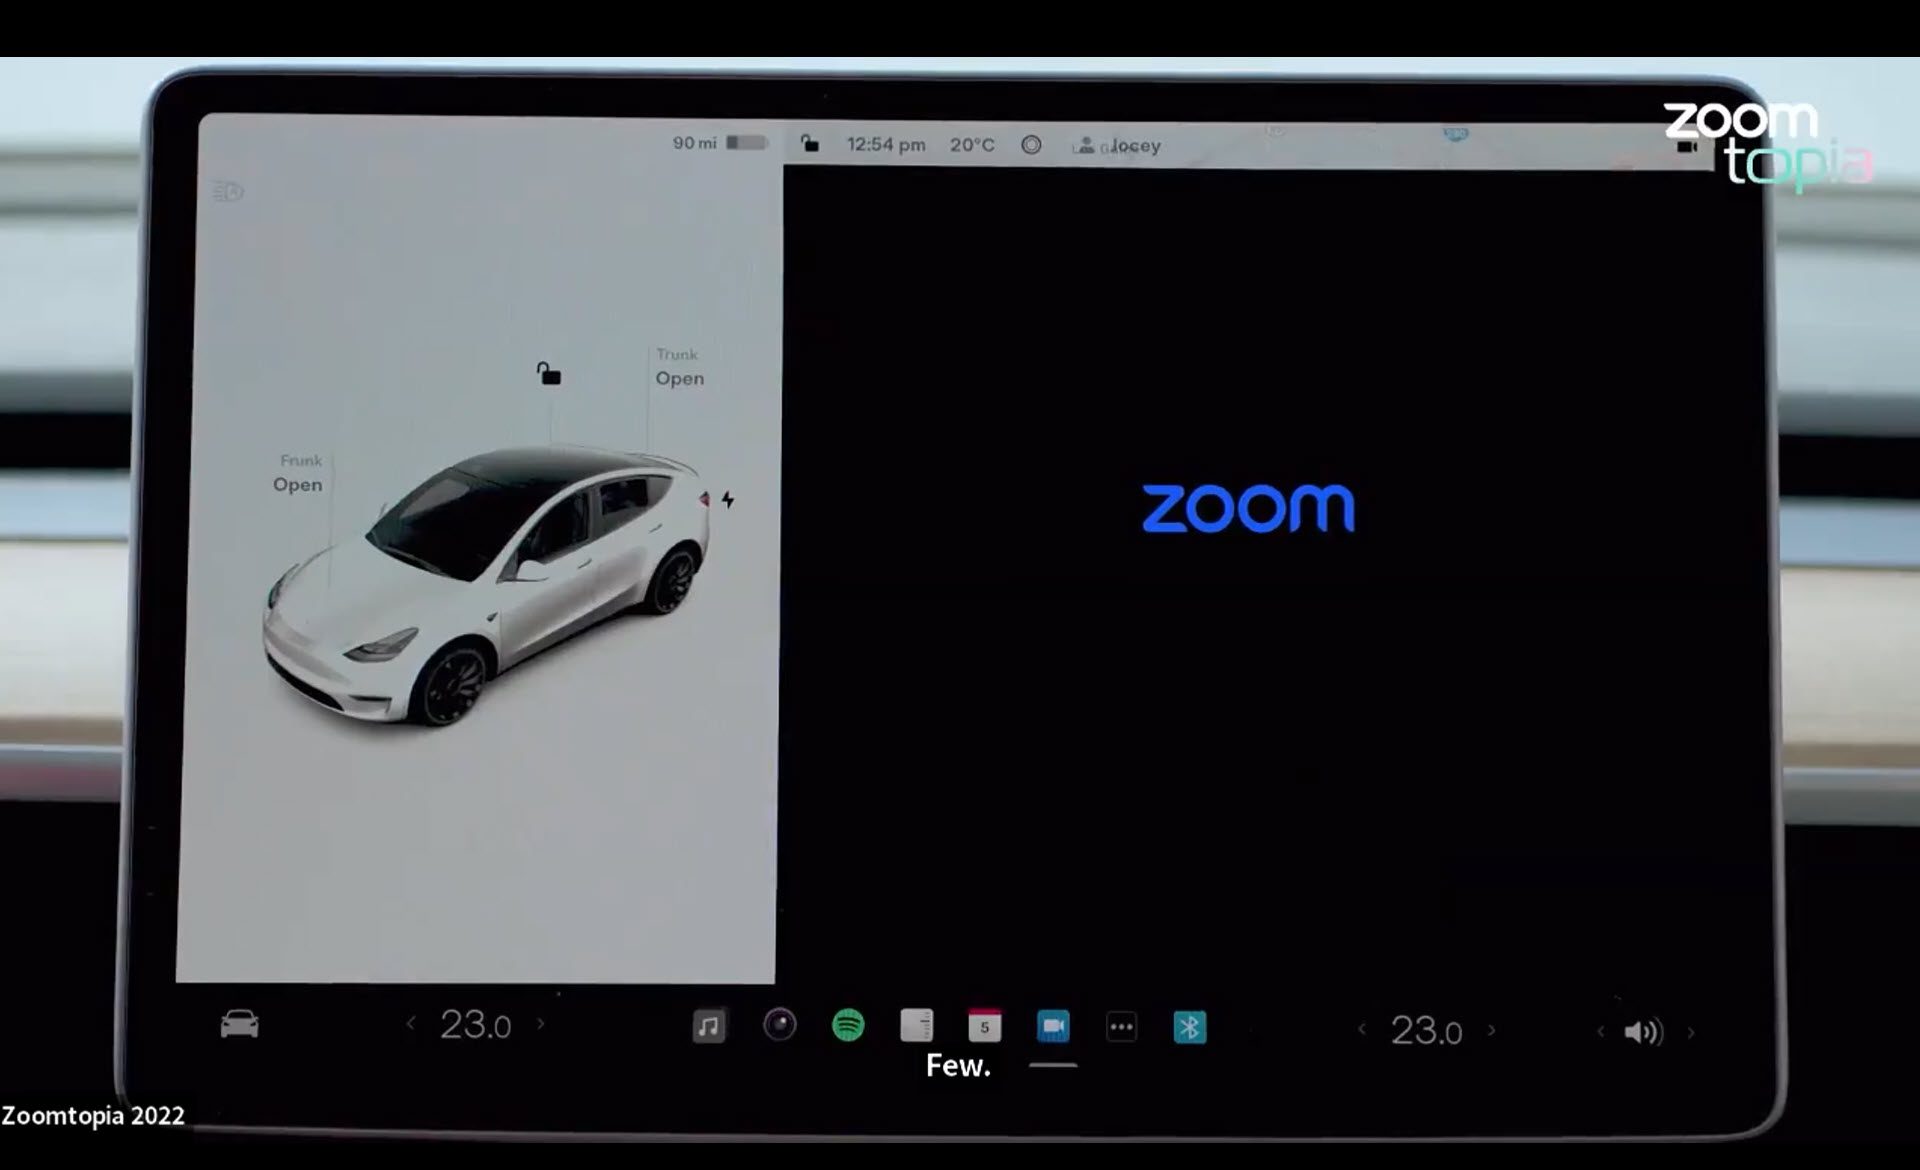 Zoom in Tesla app